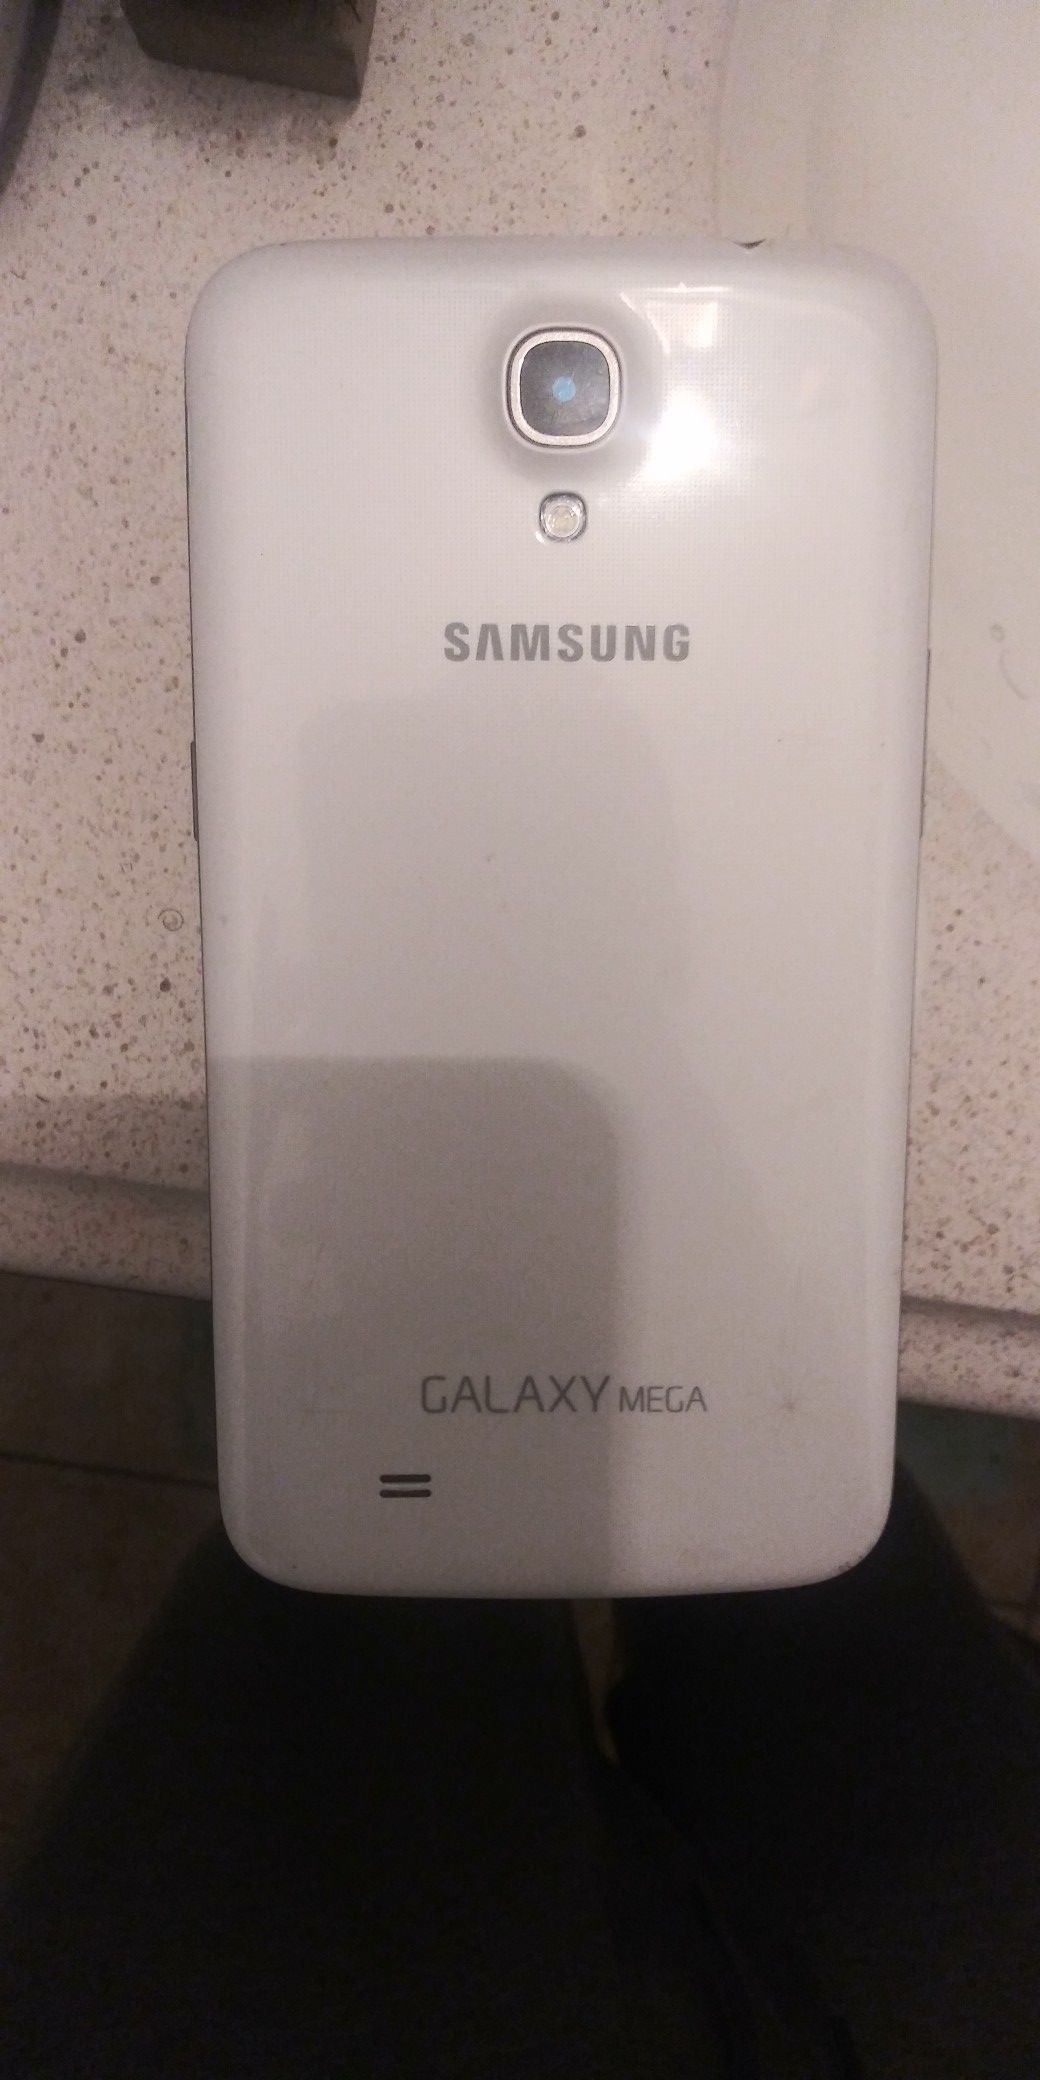 New Samsung Galaxy mega Sprint